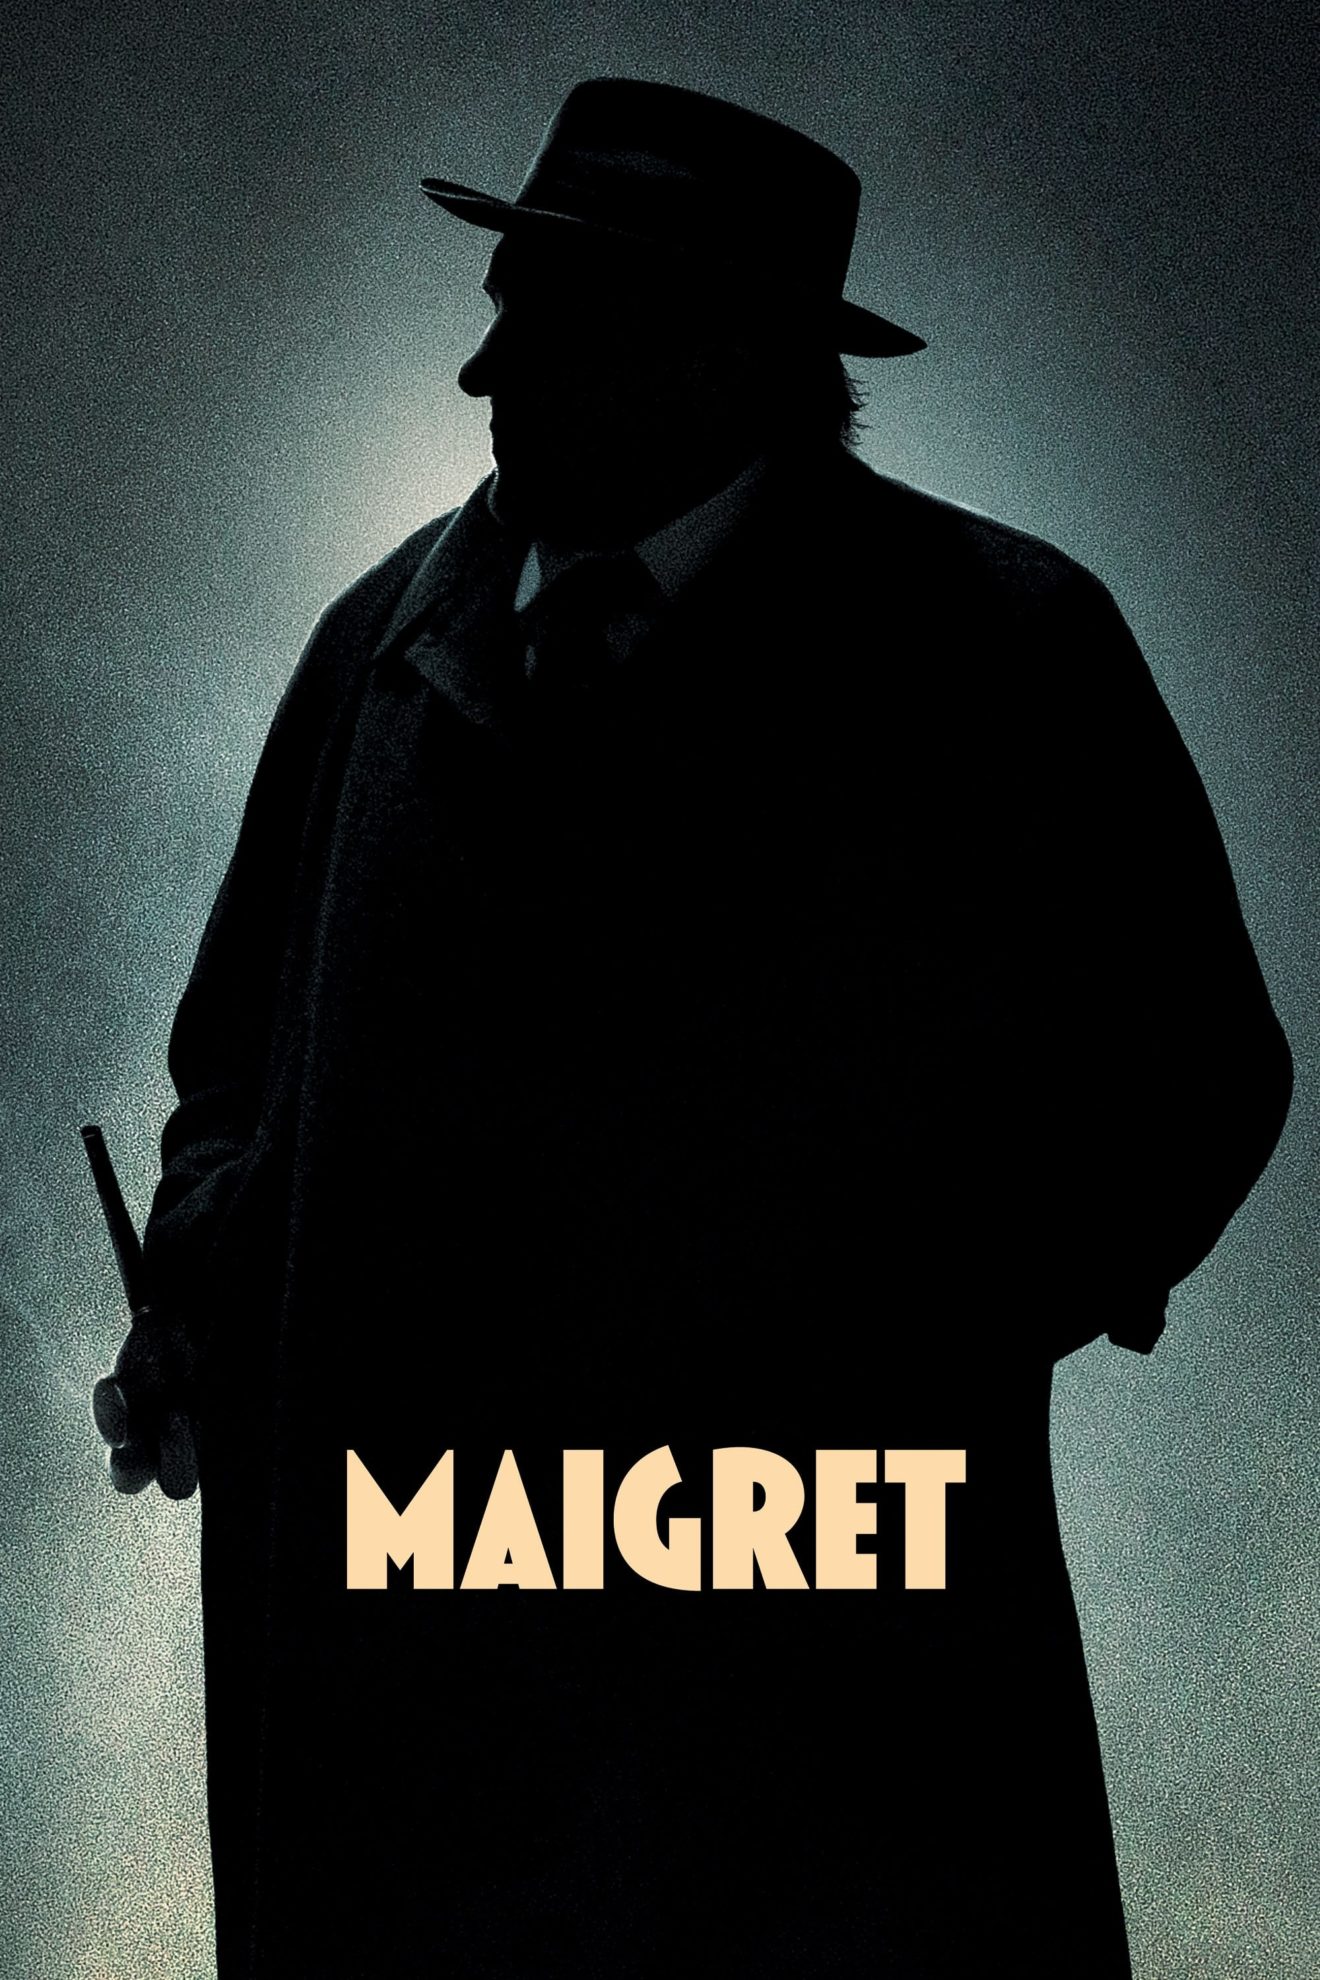 Affiche du film "Maigret"